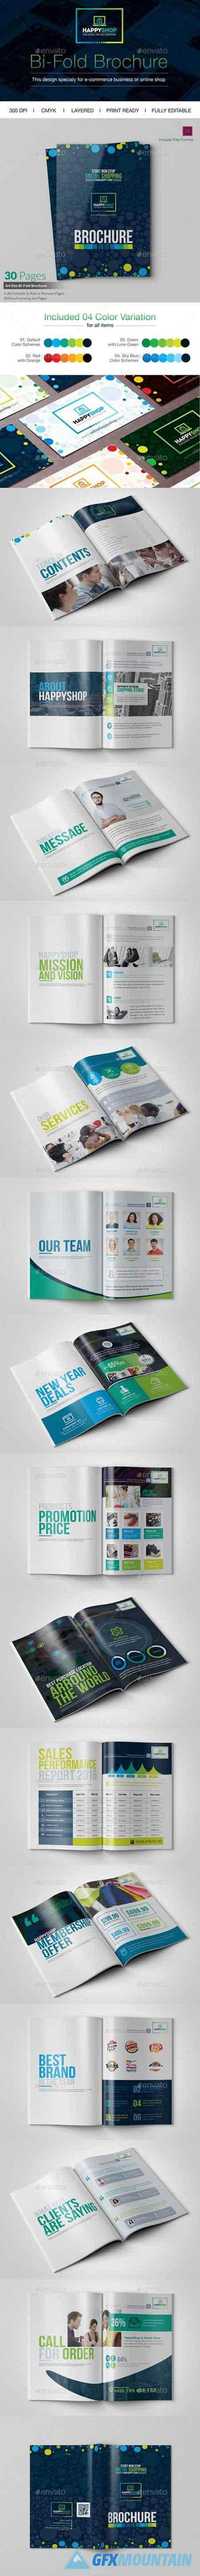 E-Commerce Promotional Bi-Fold Brochure 14464632